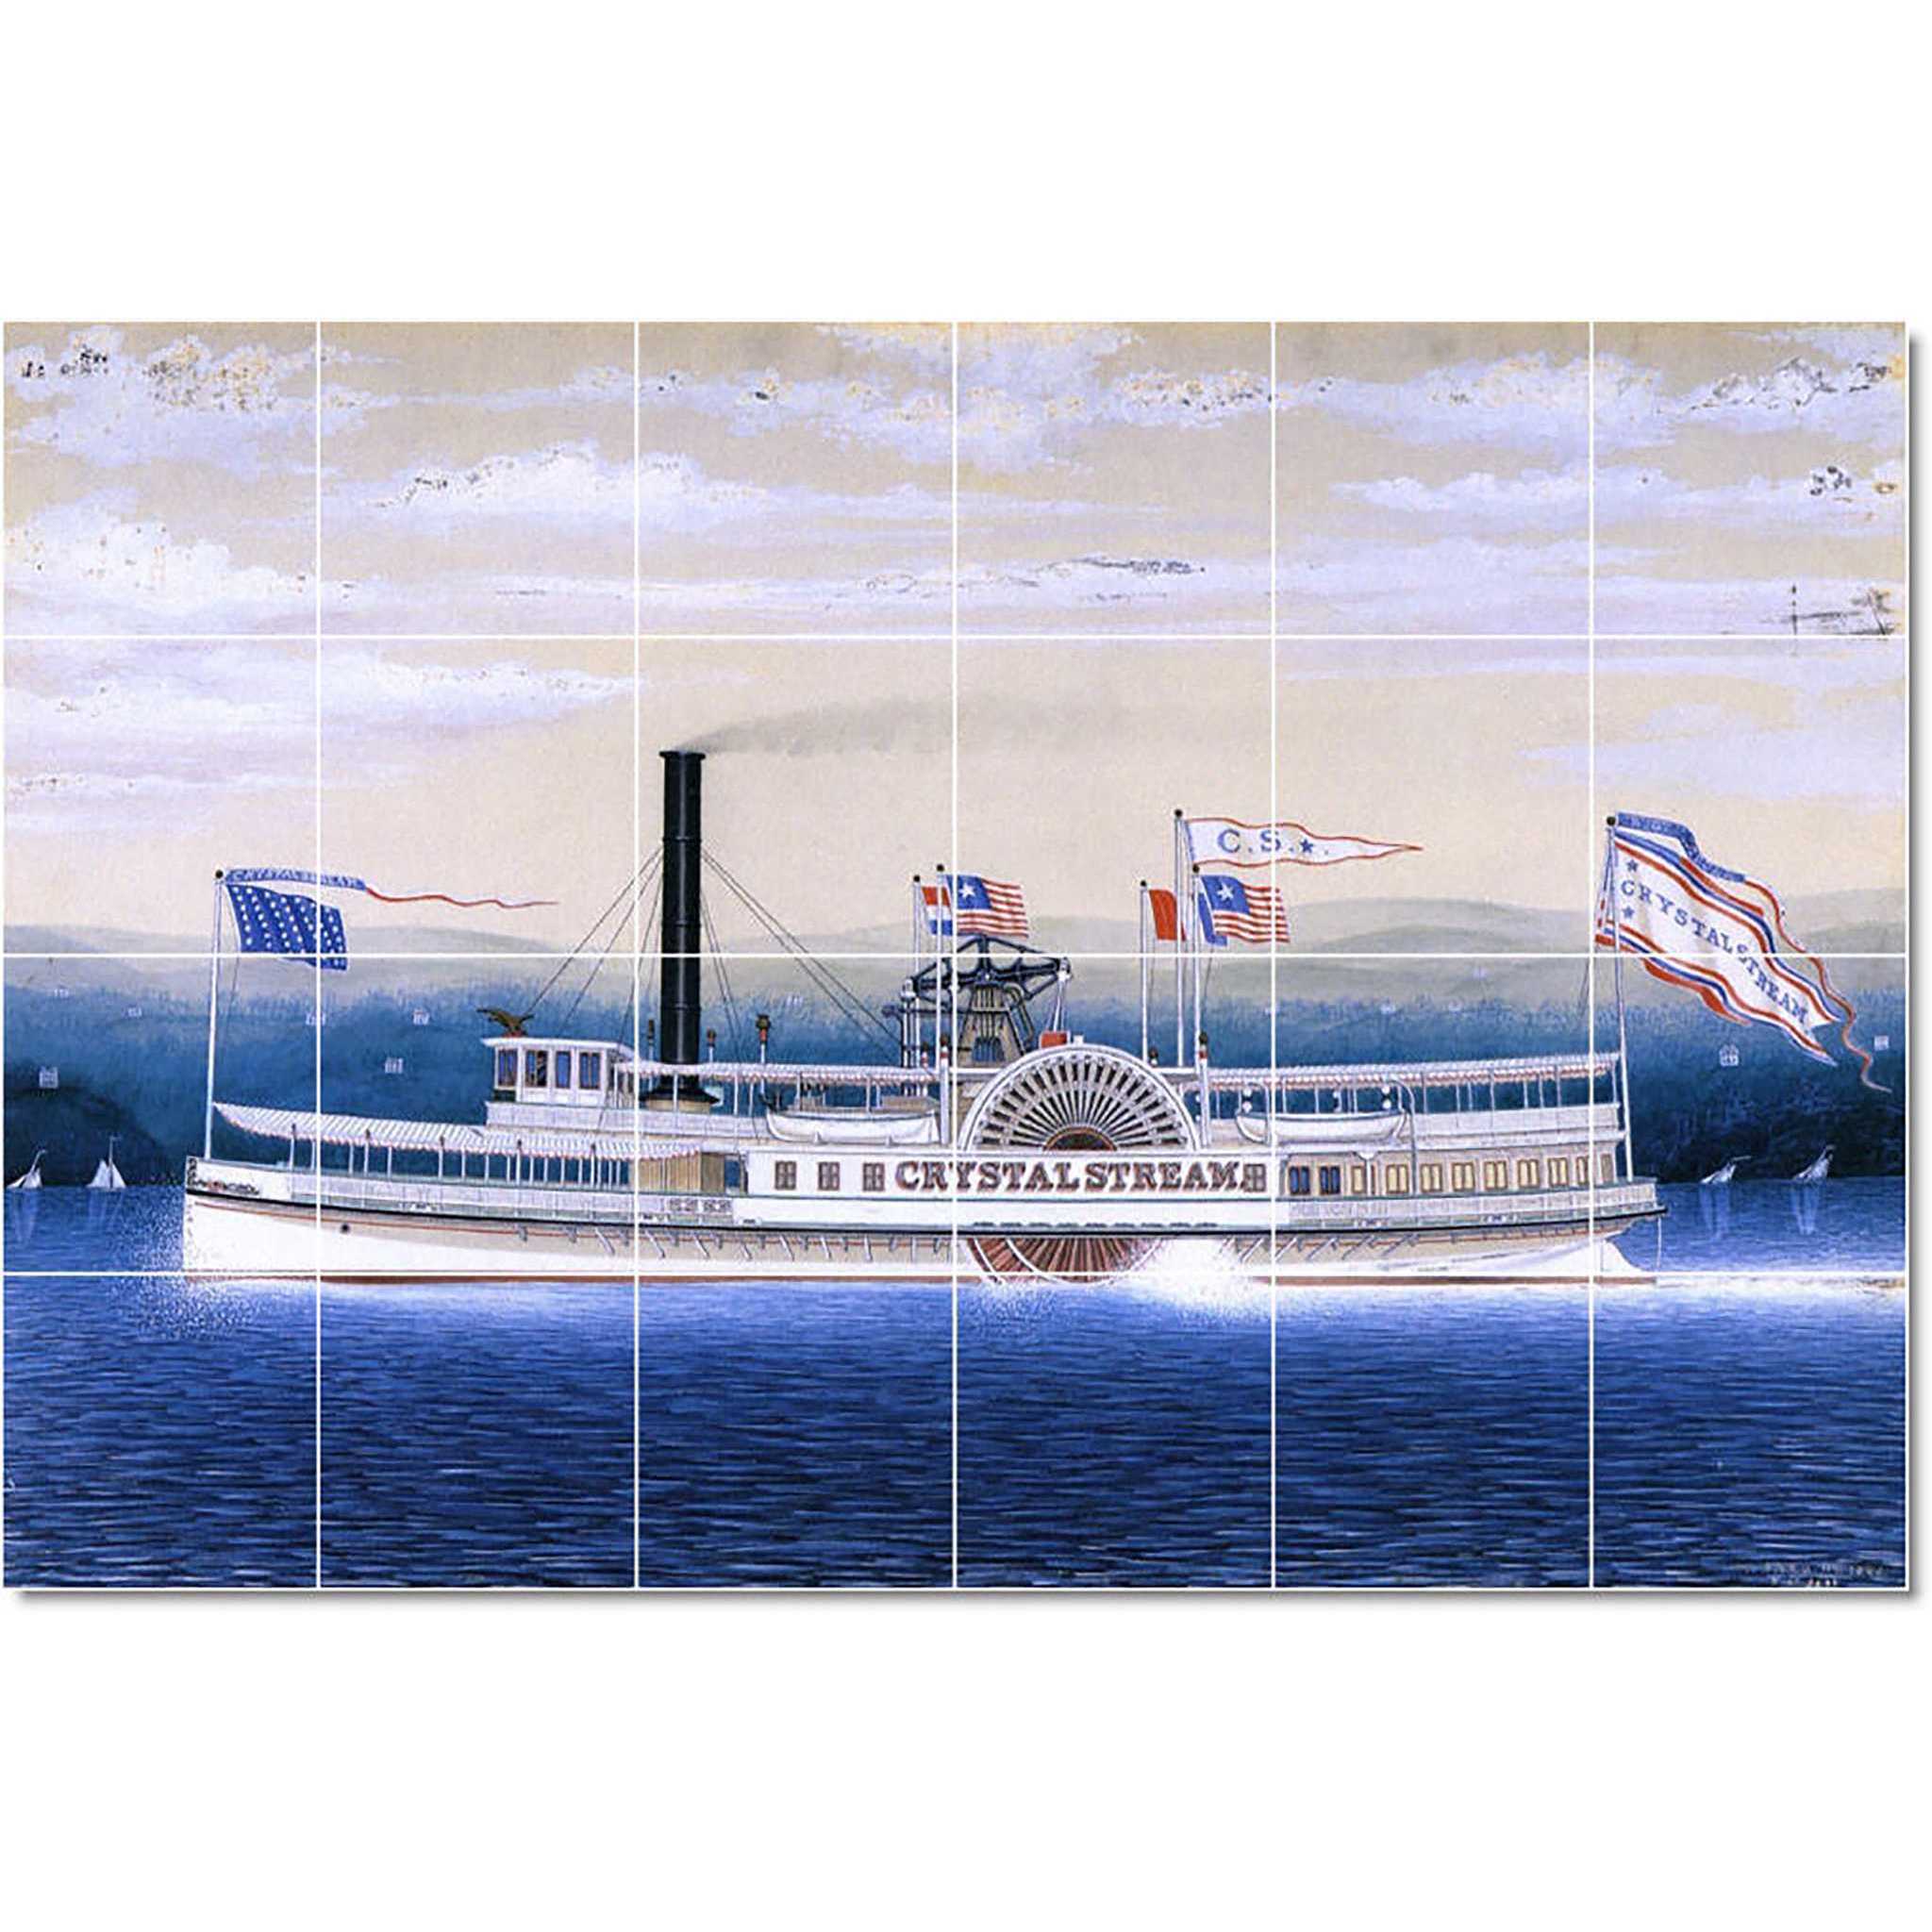 james bard boat ship painting ceramic tile mural p22060